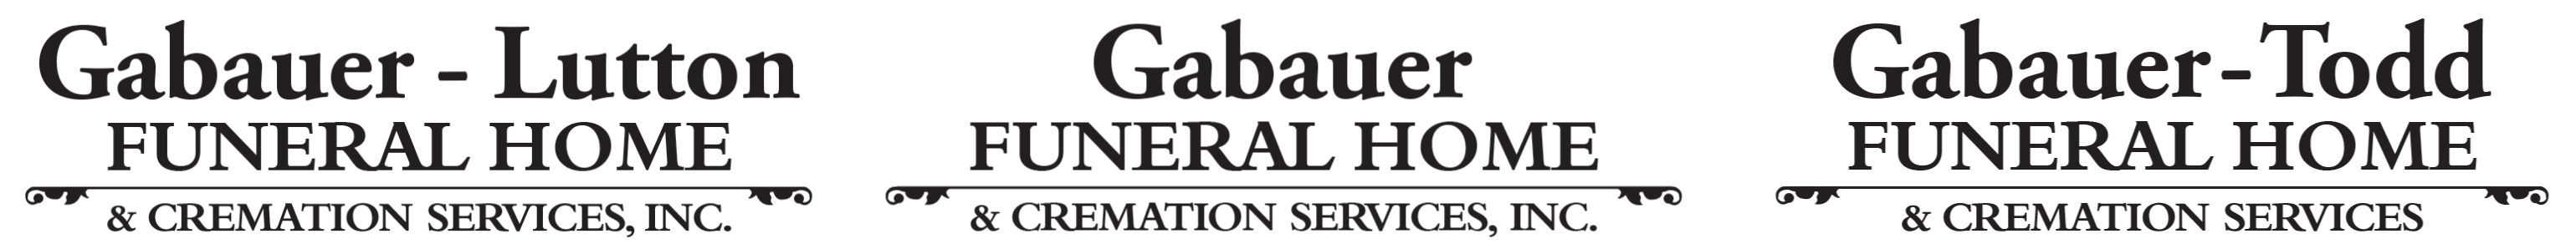 Gabauer-Funeral-Homes-Logos-Multiple-01